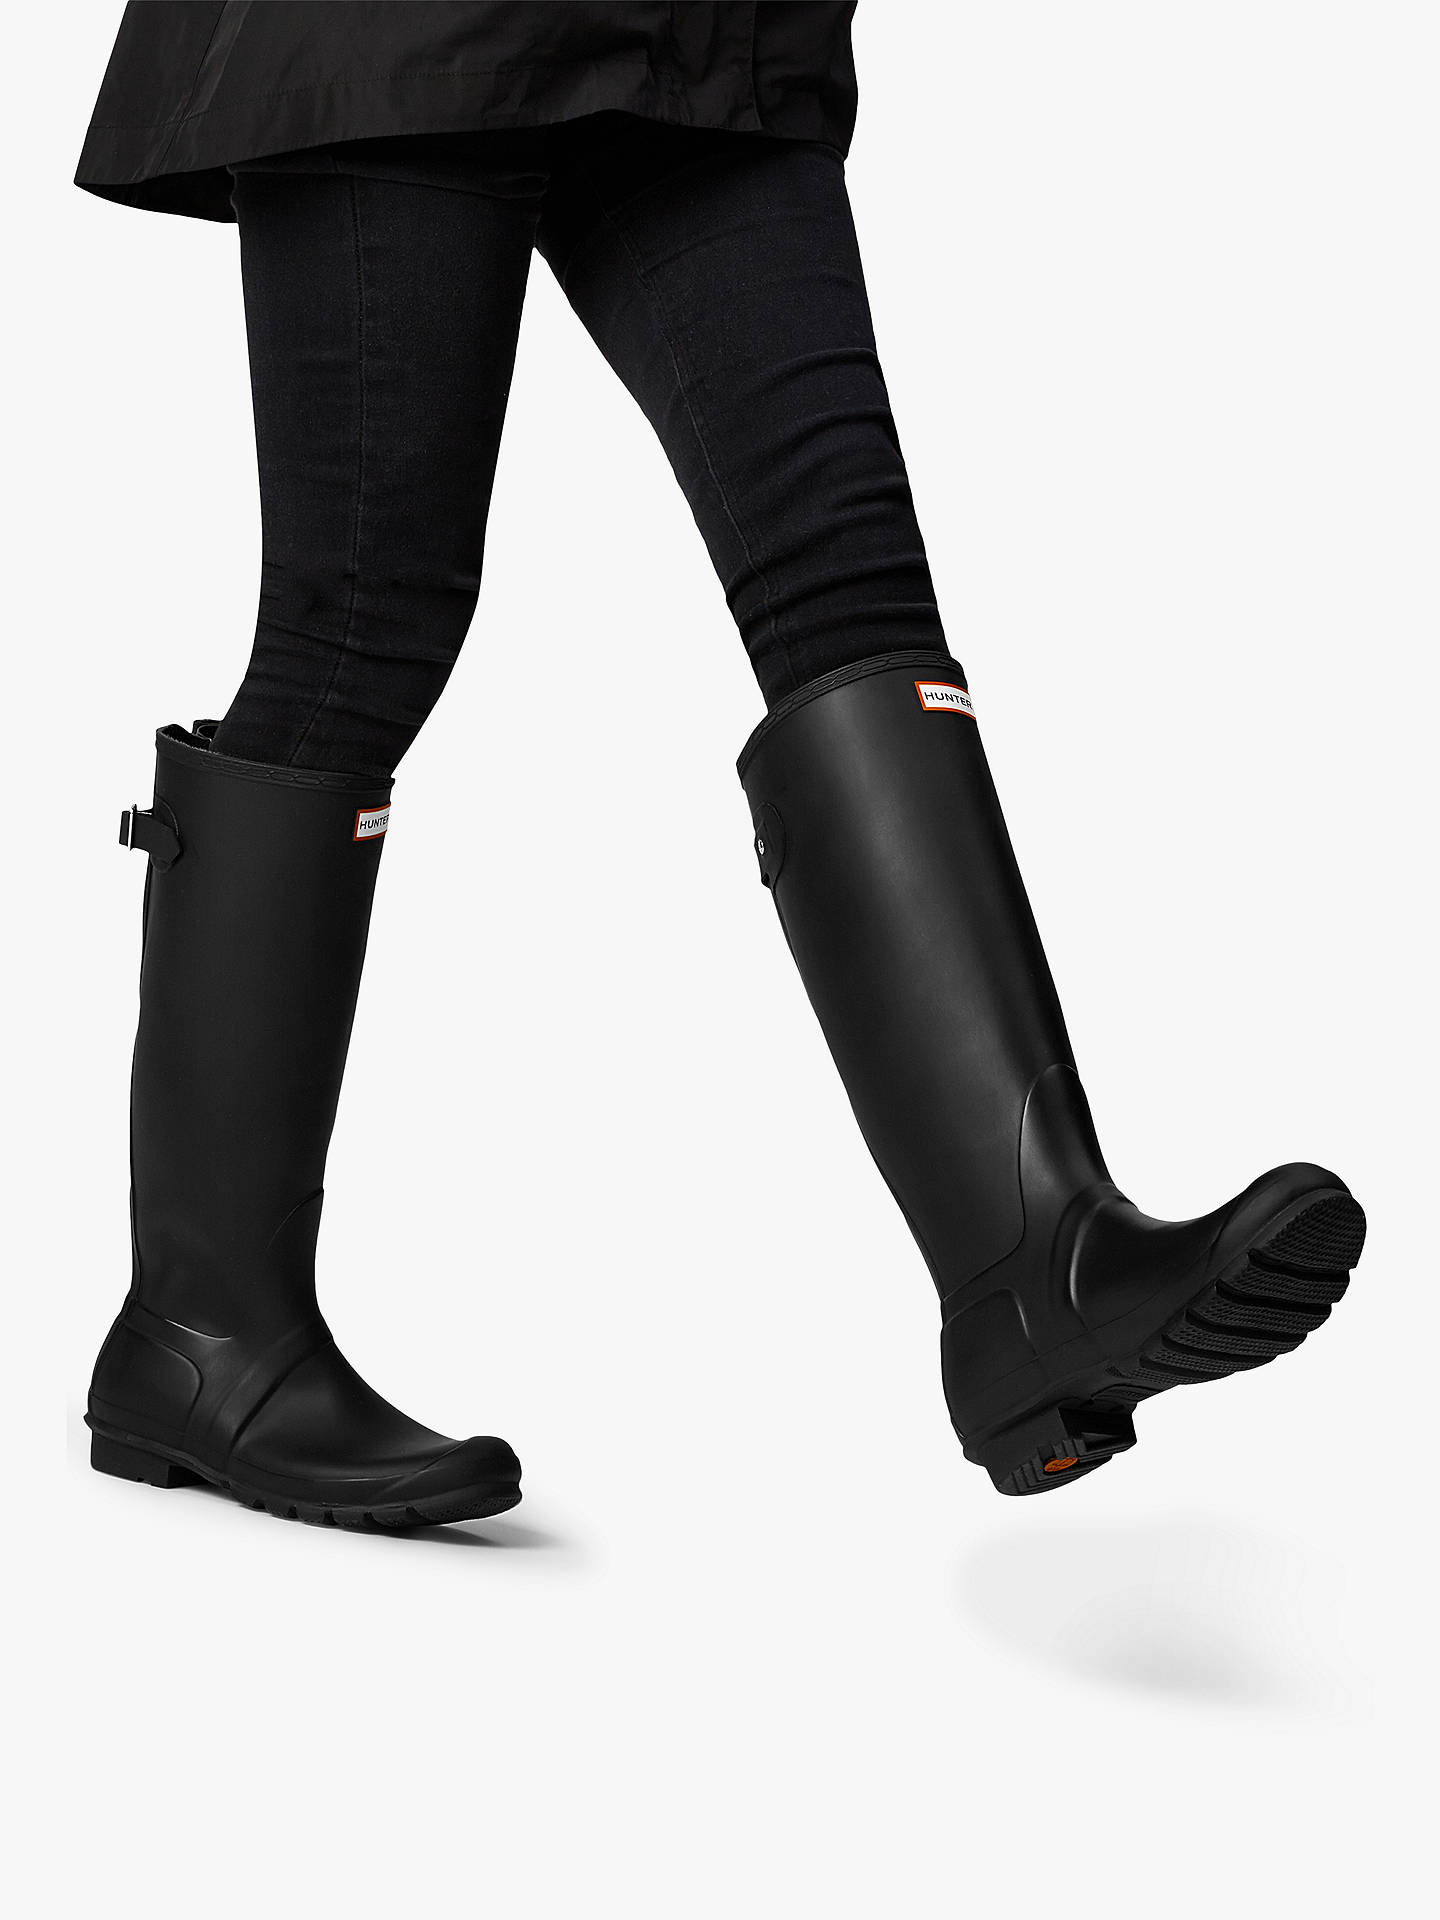 Ladies Womens  Original Tall  Waterproof Rain Festival  Wellies Wellington Boots